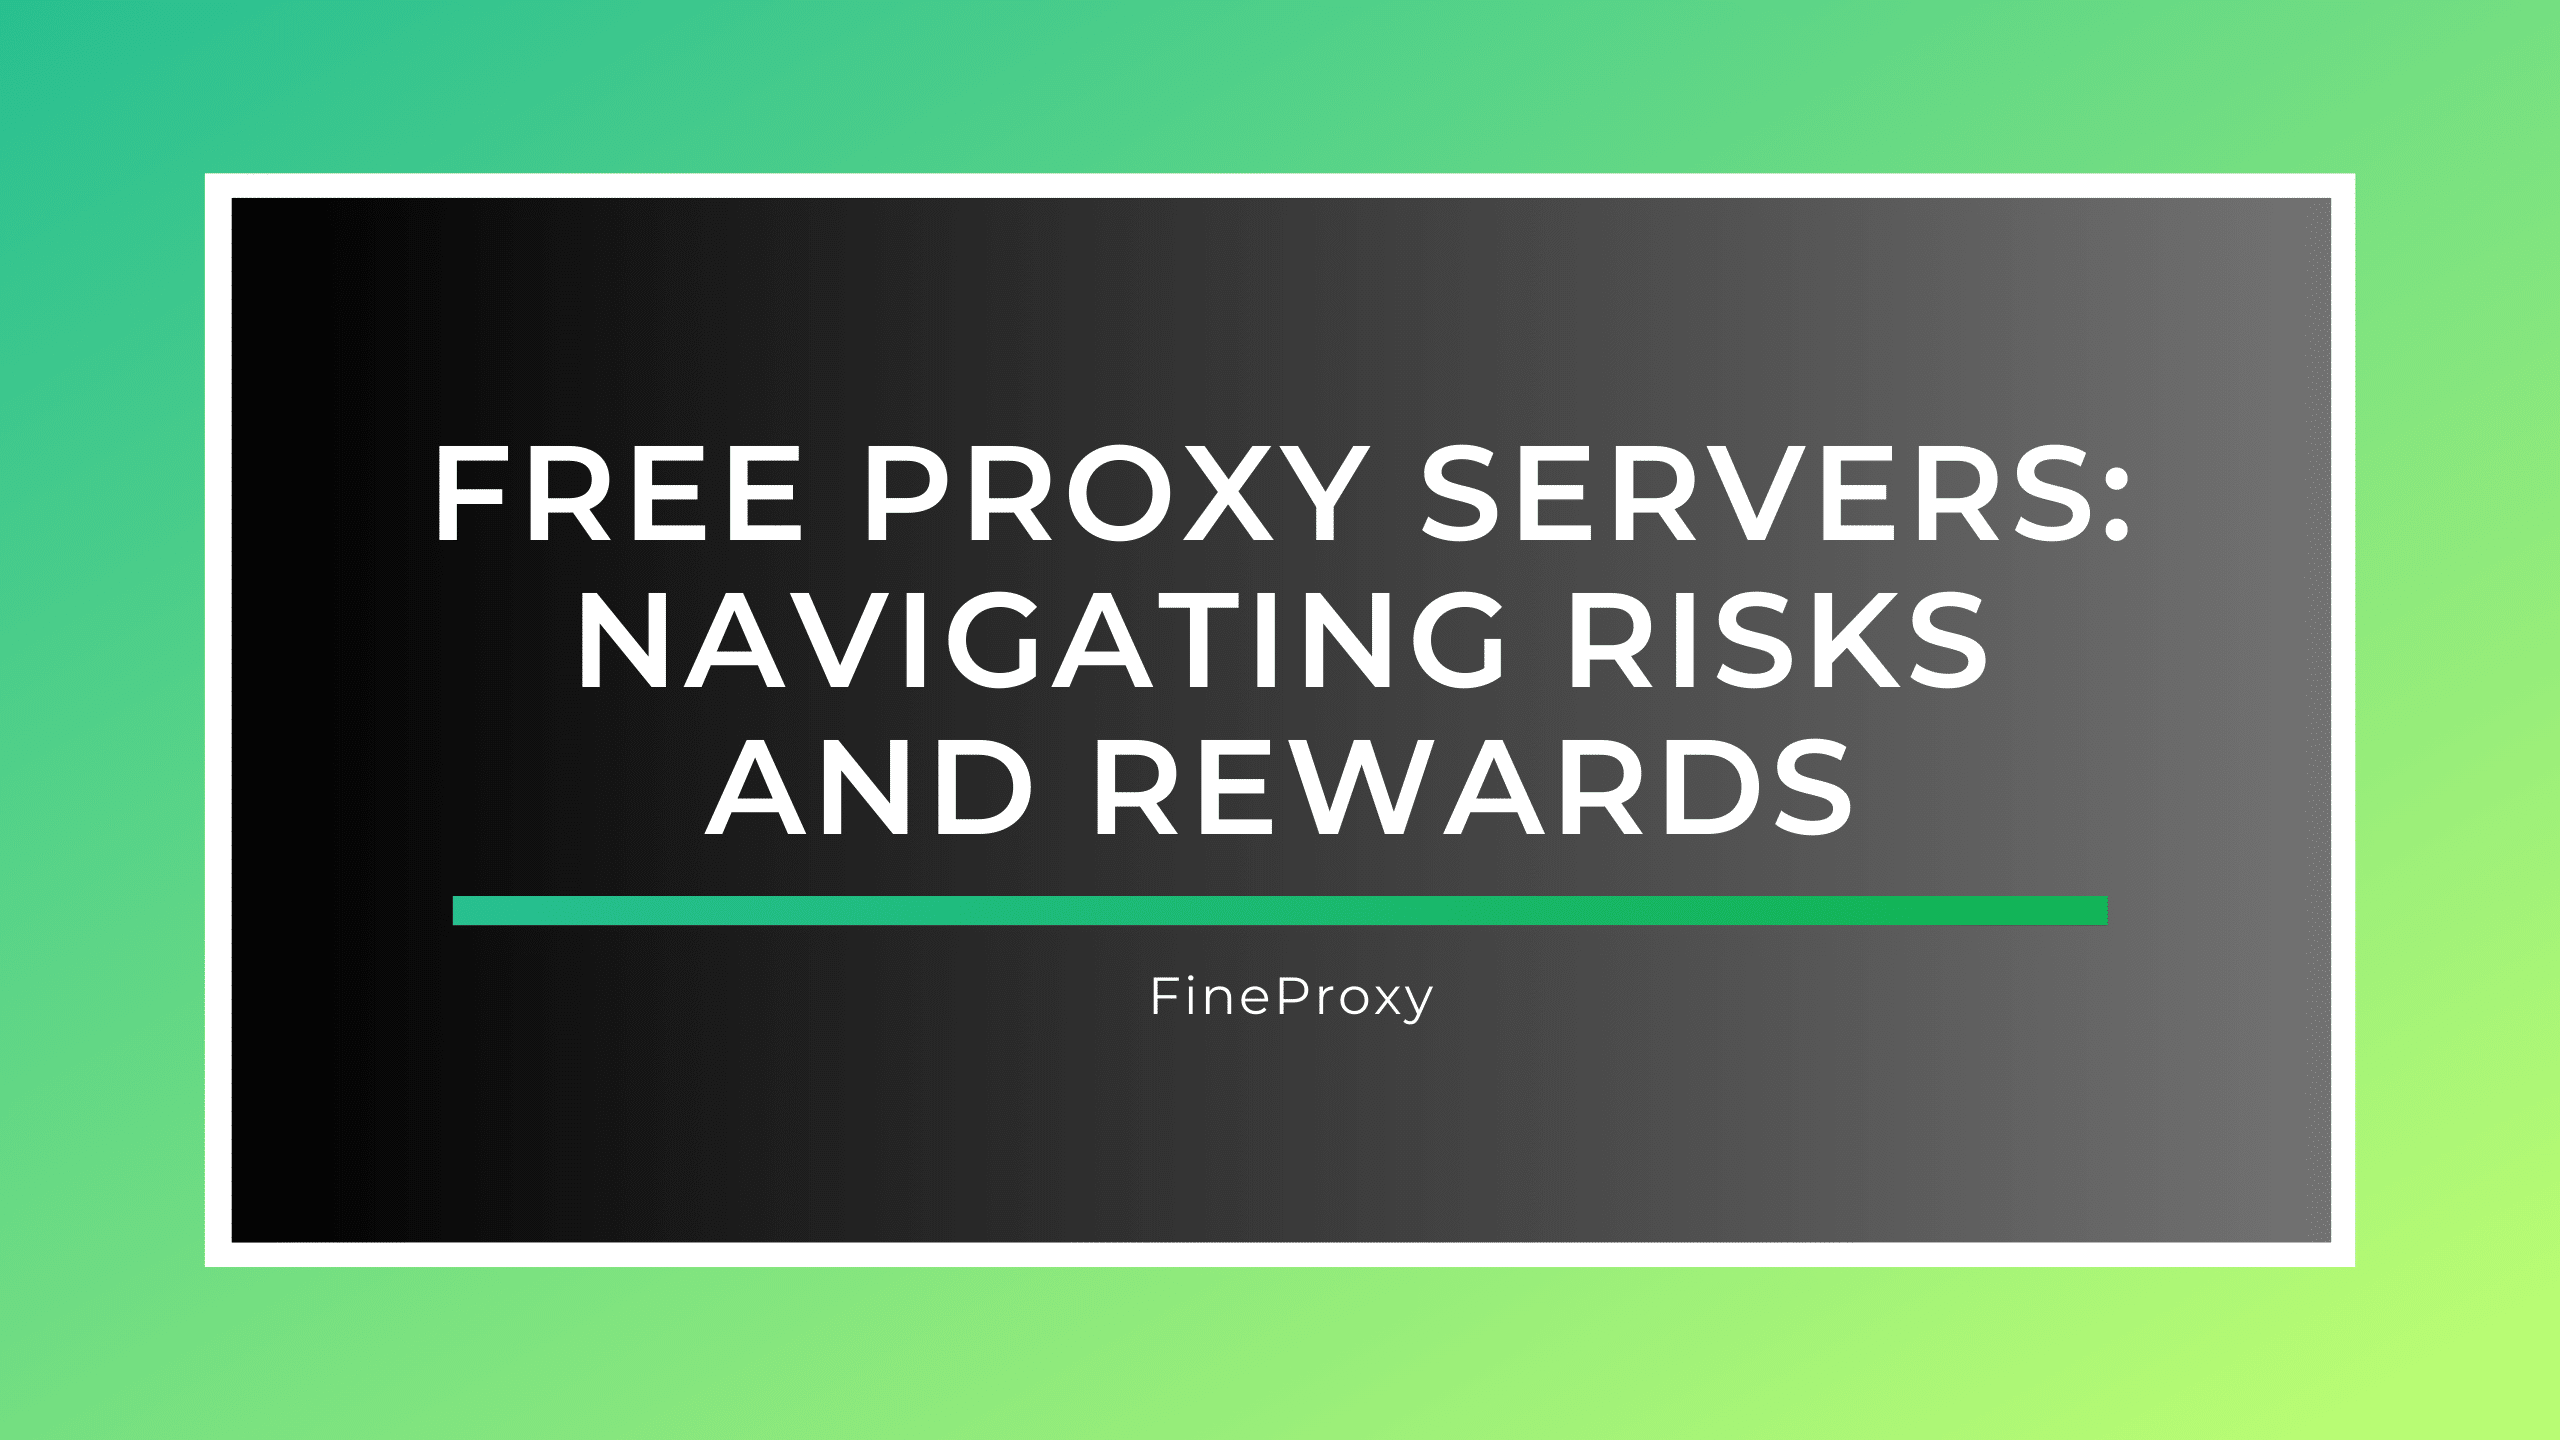 Free Proxy Servers: Navigating Risks and Rewards